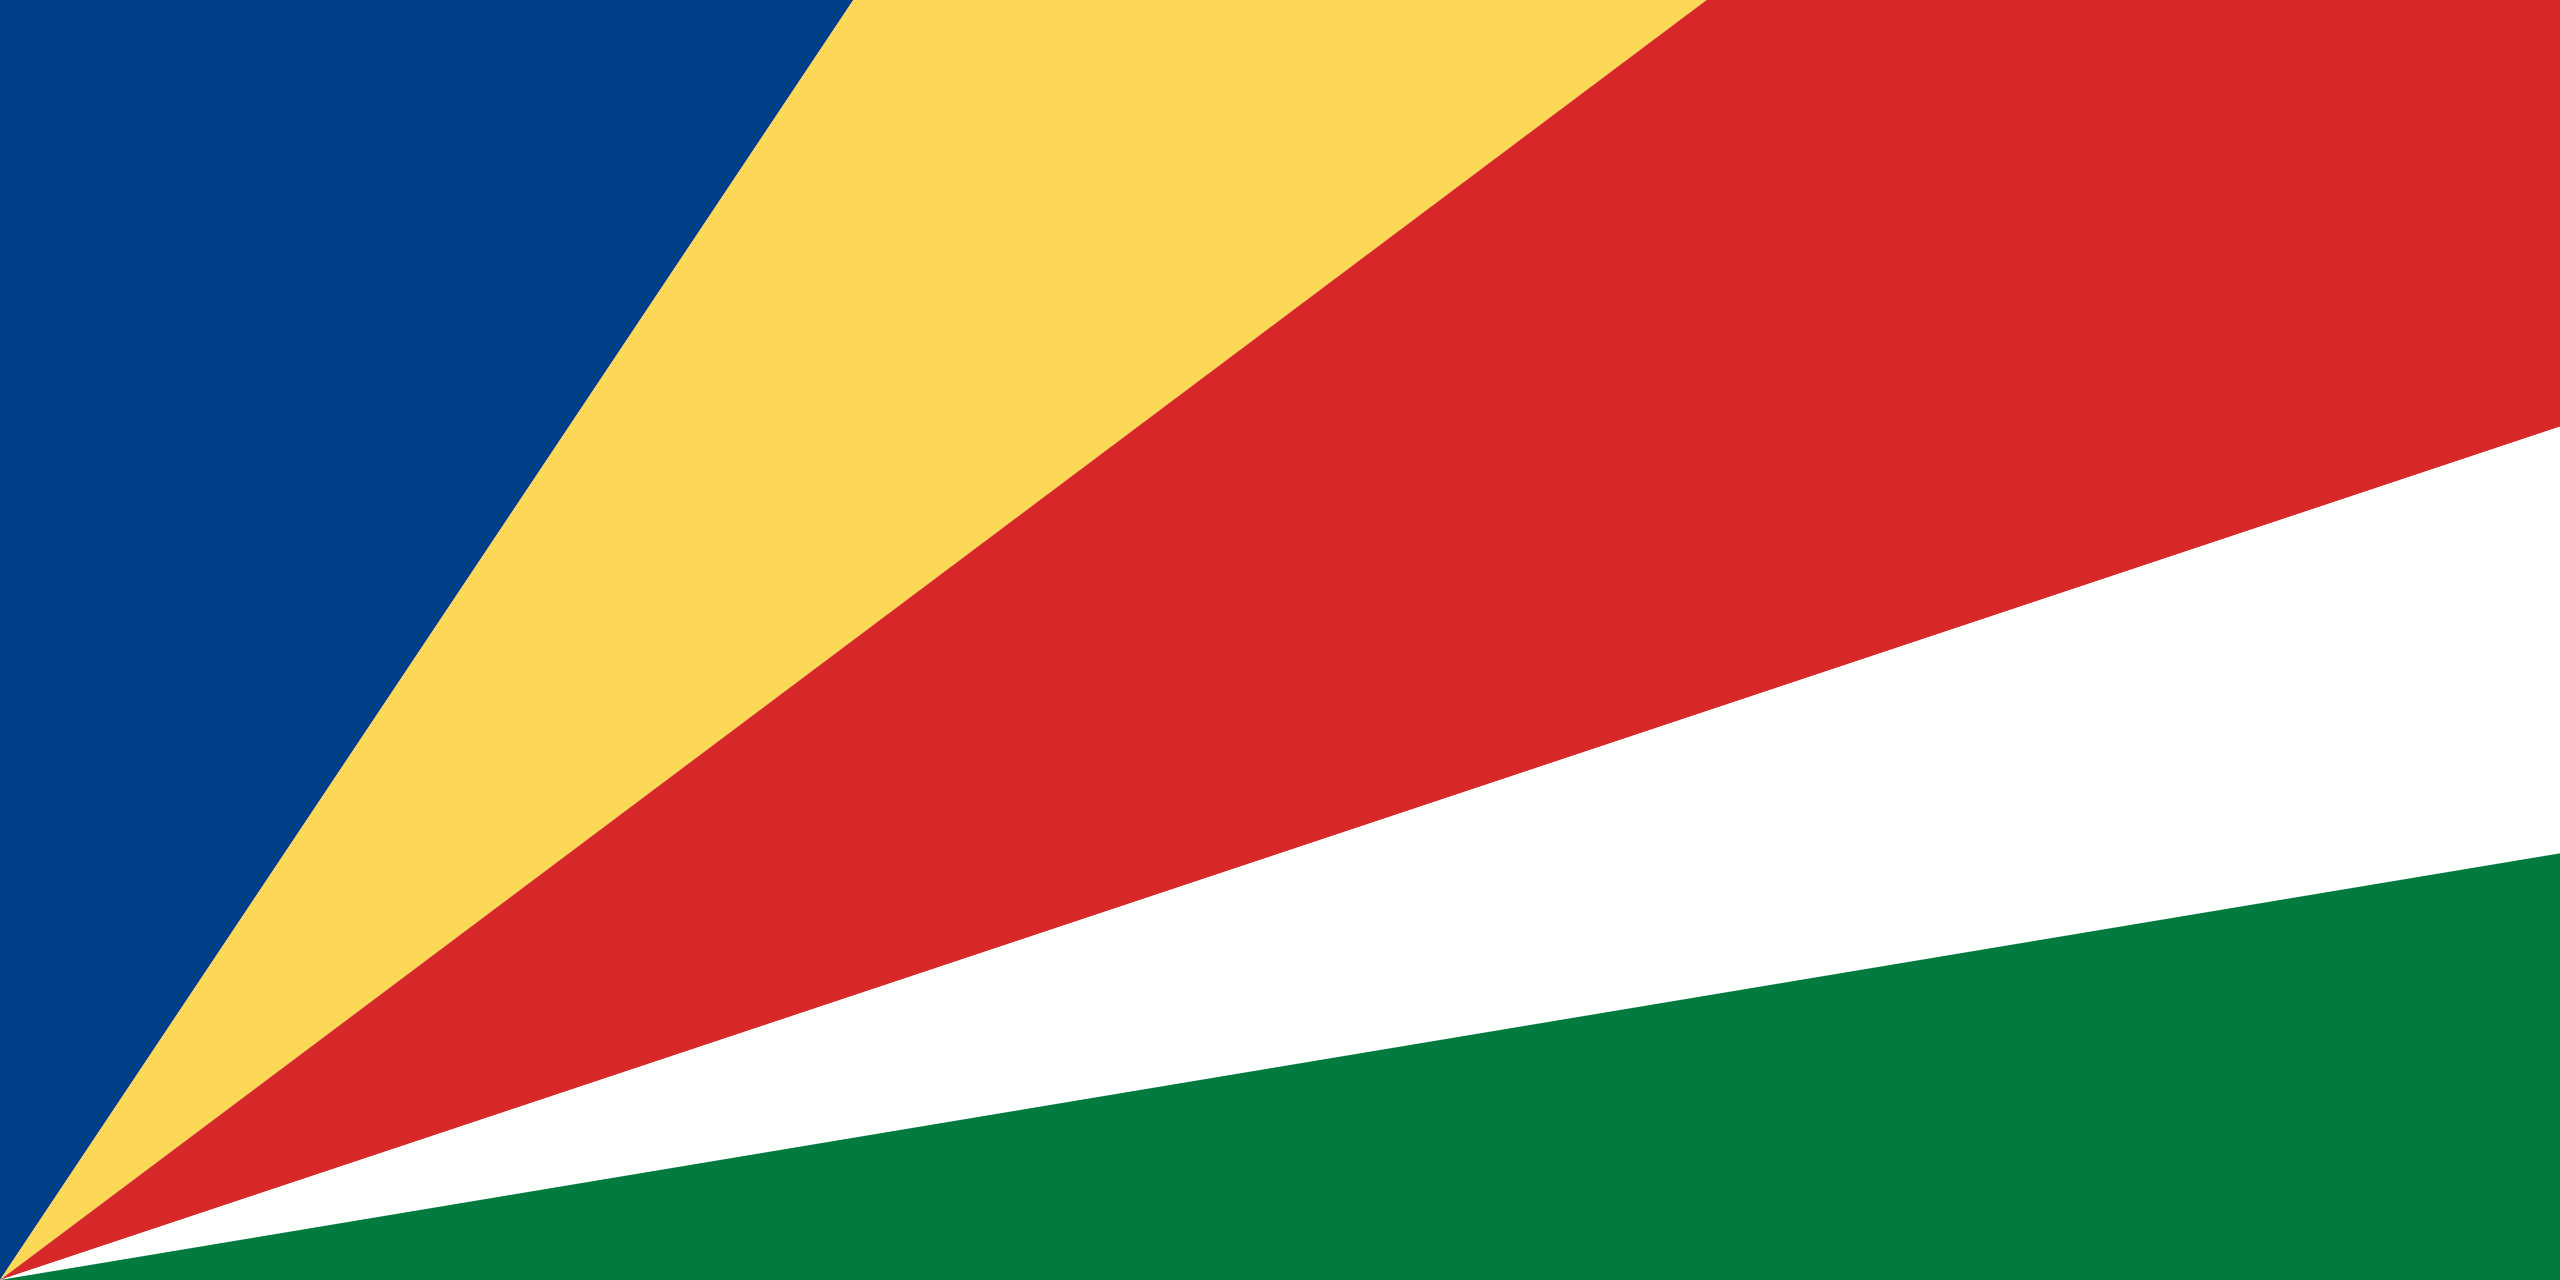 Seychelles's flag